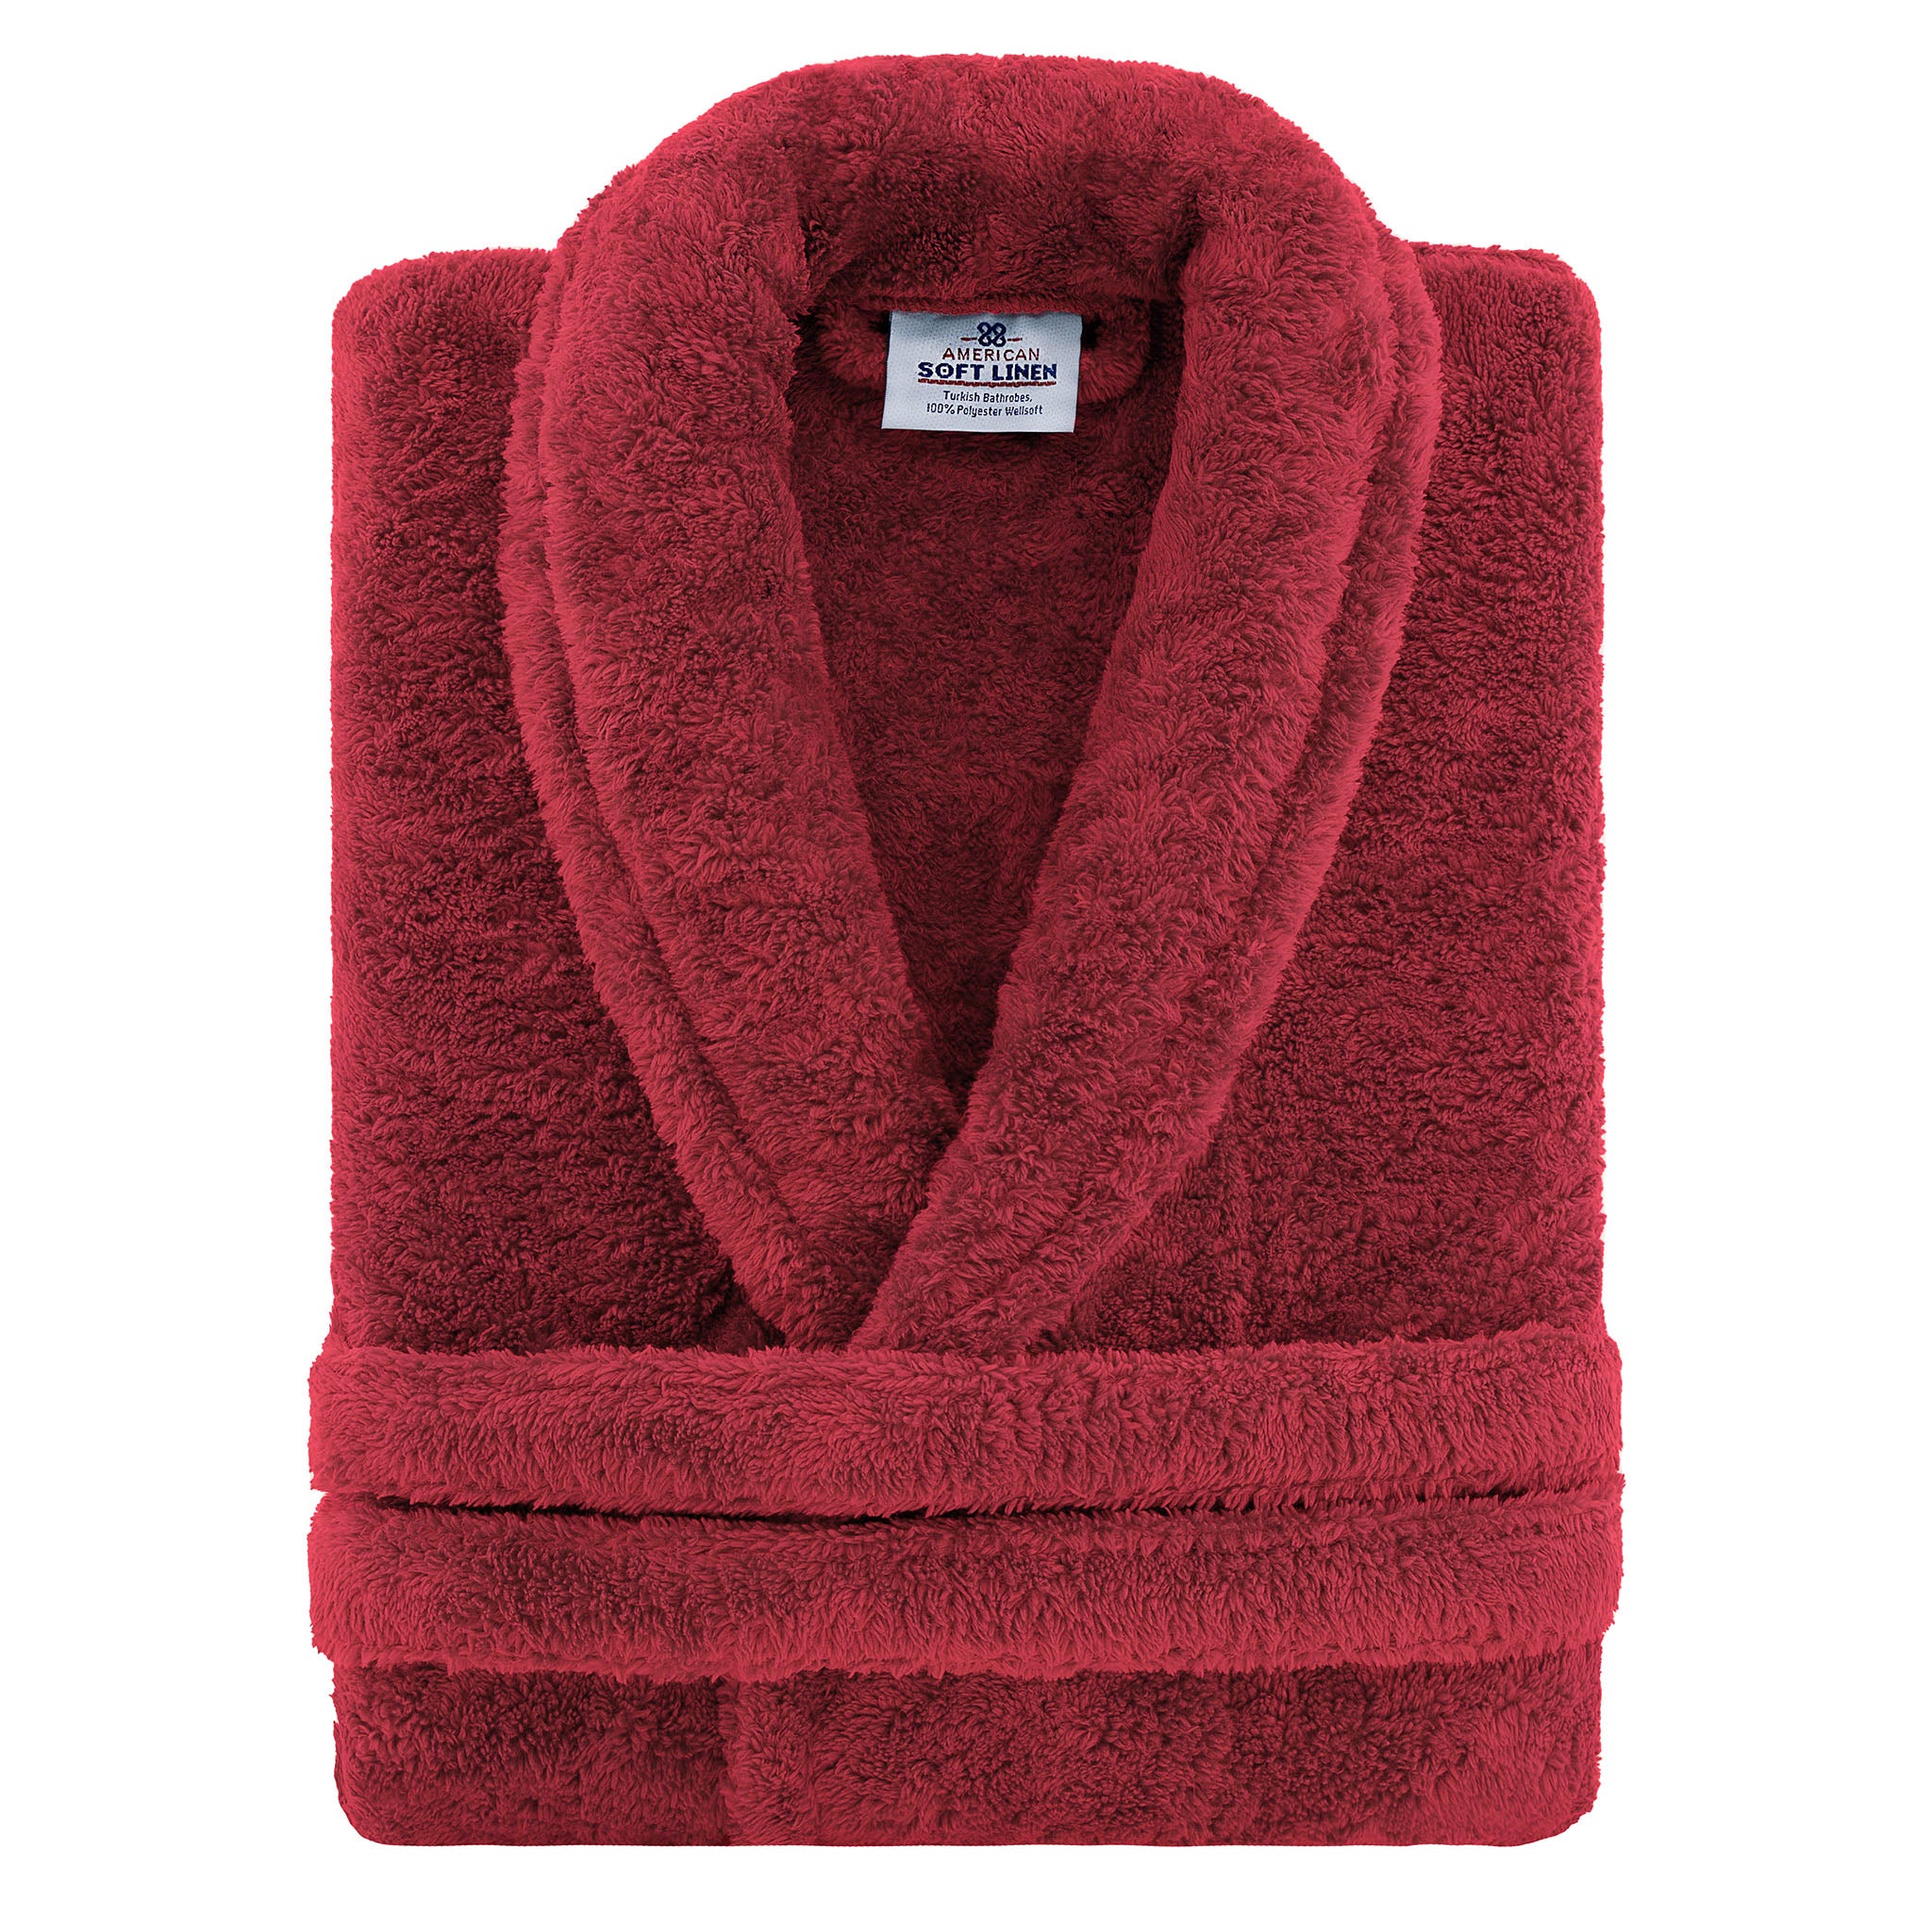 American Soft Linen Super Soft, Absorbent and Fluffy, Unisex Fleece Bathrobe S-M-Bordeaux-red-3